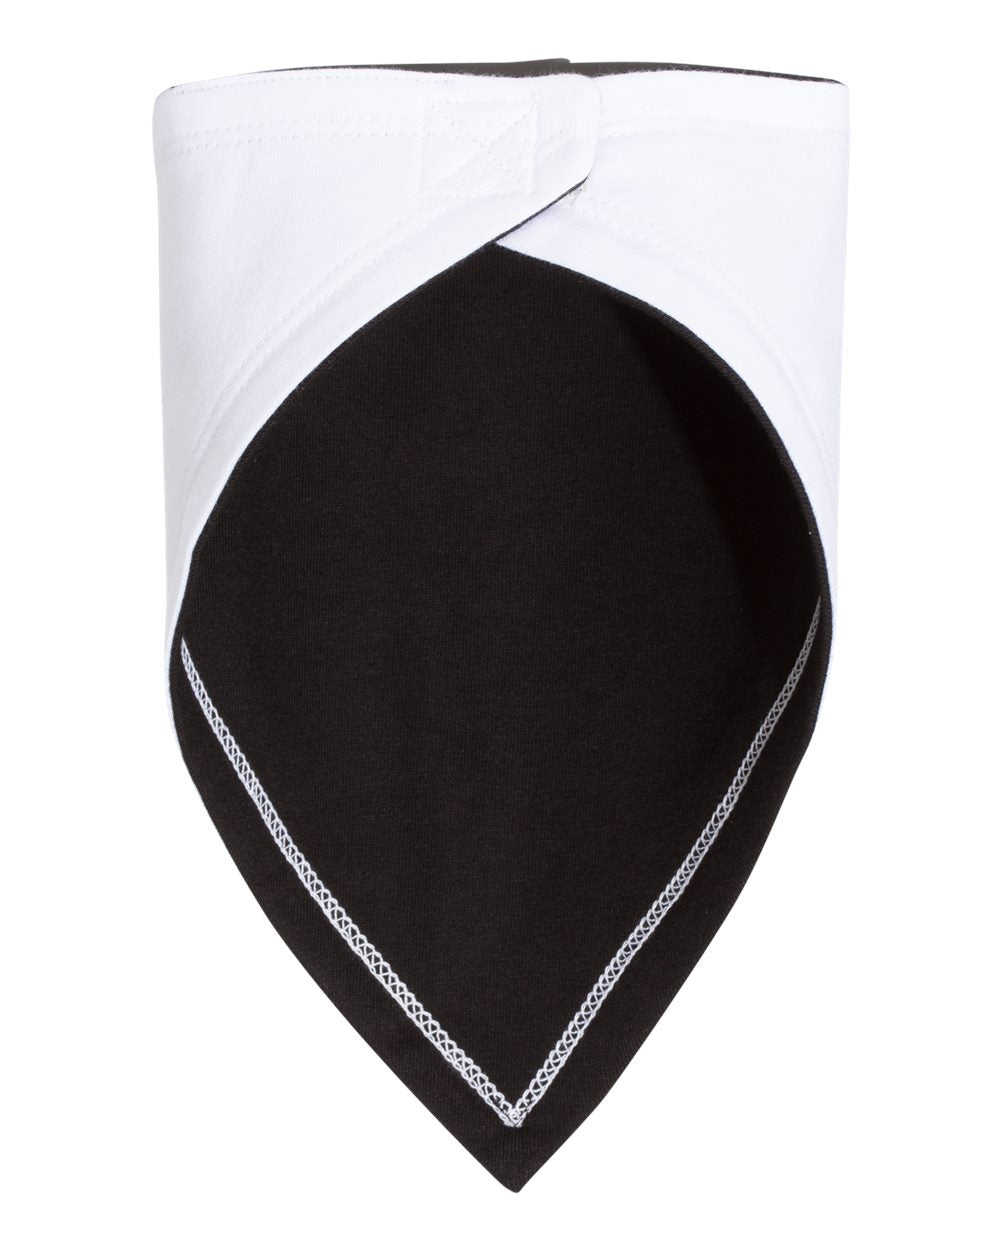 rabbit skins infant premium jersey bandana bib white black